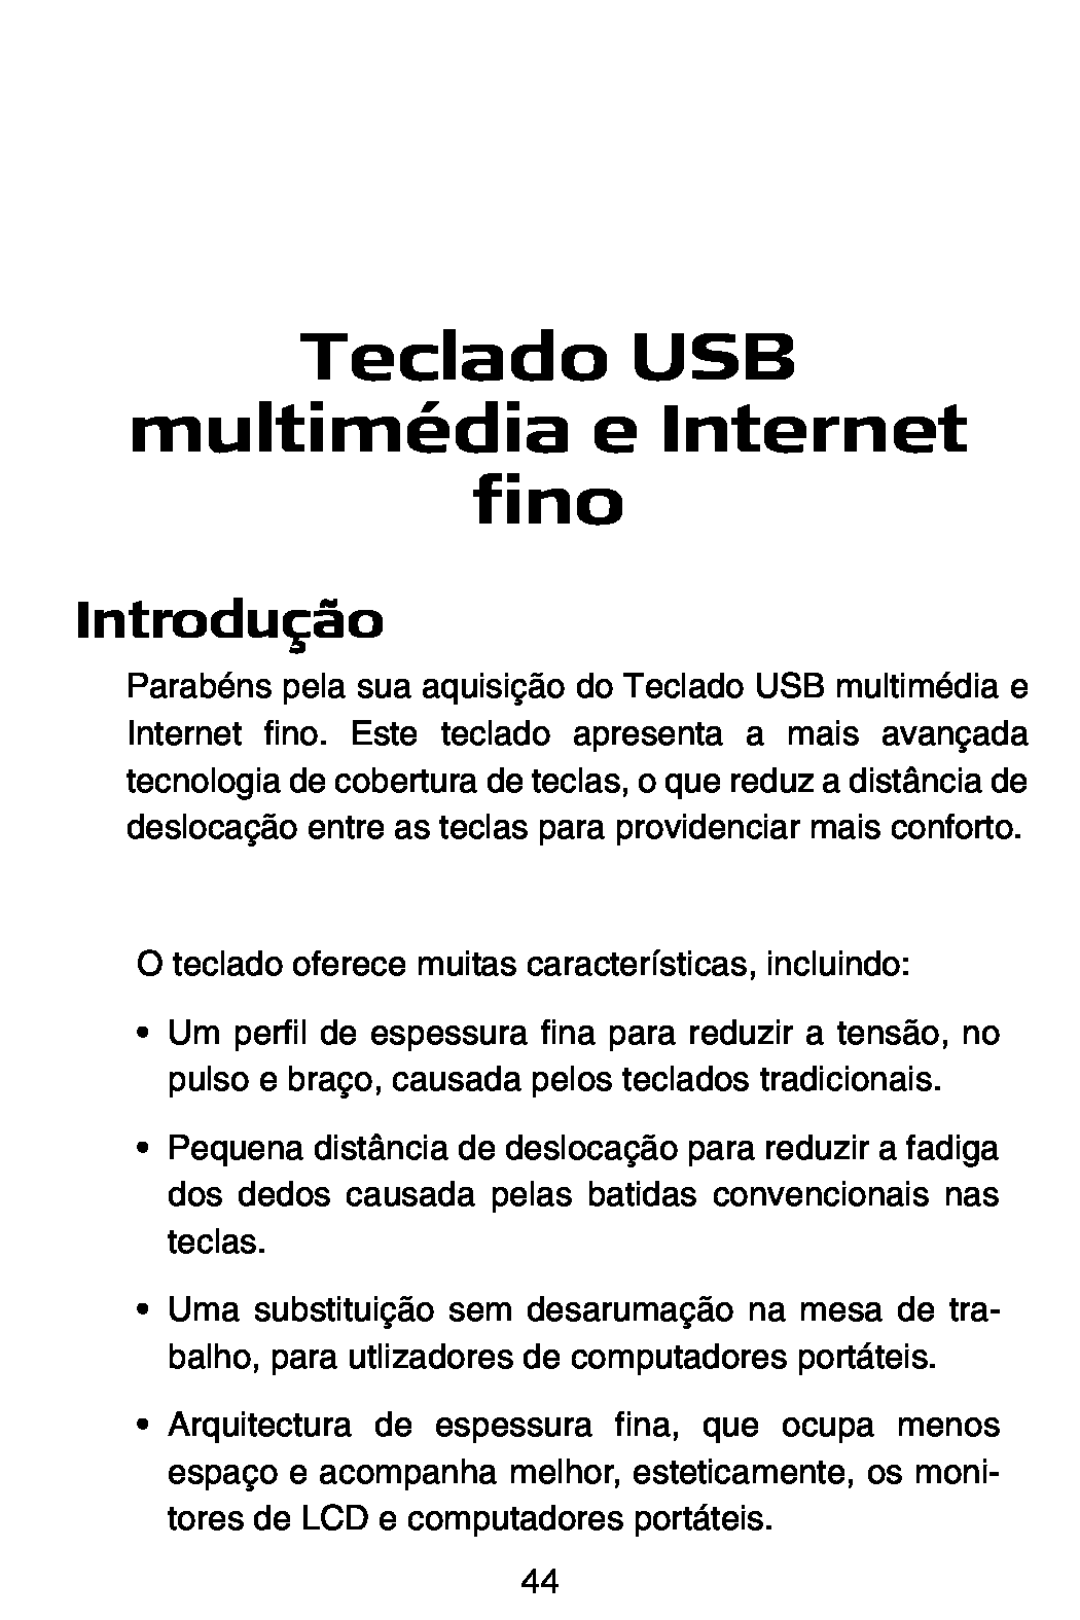 Targus slim internet multimedia USB keyboard specifications Teclado USB multimédia e Internet fino, Introdução 